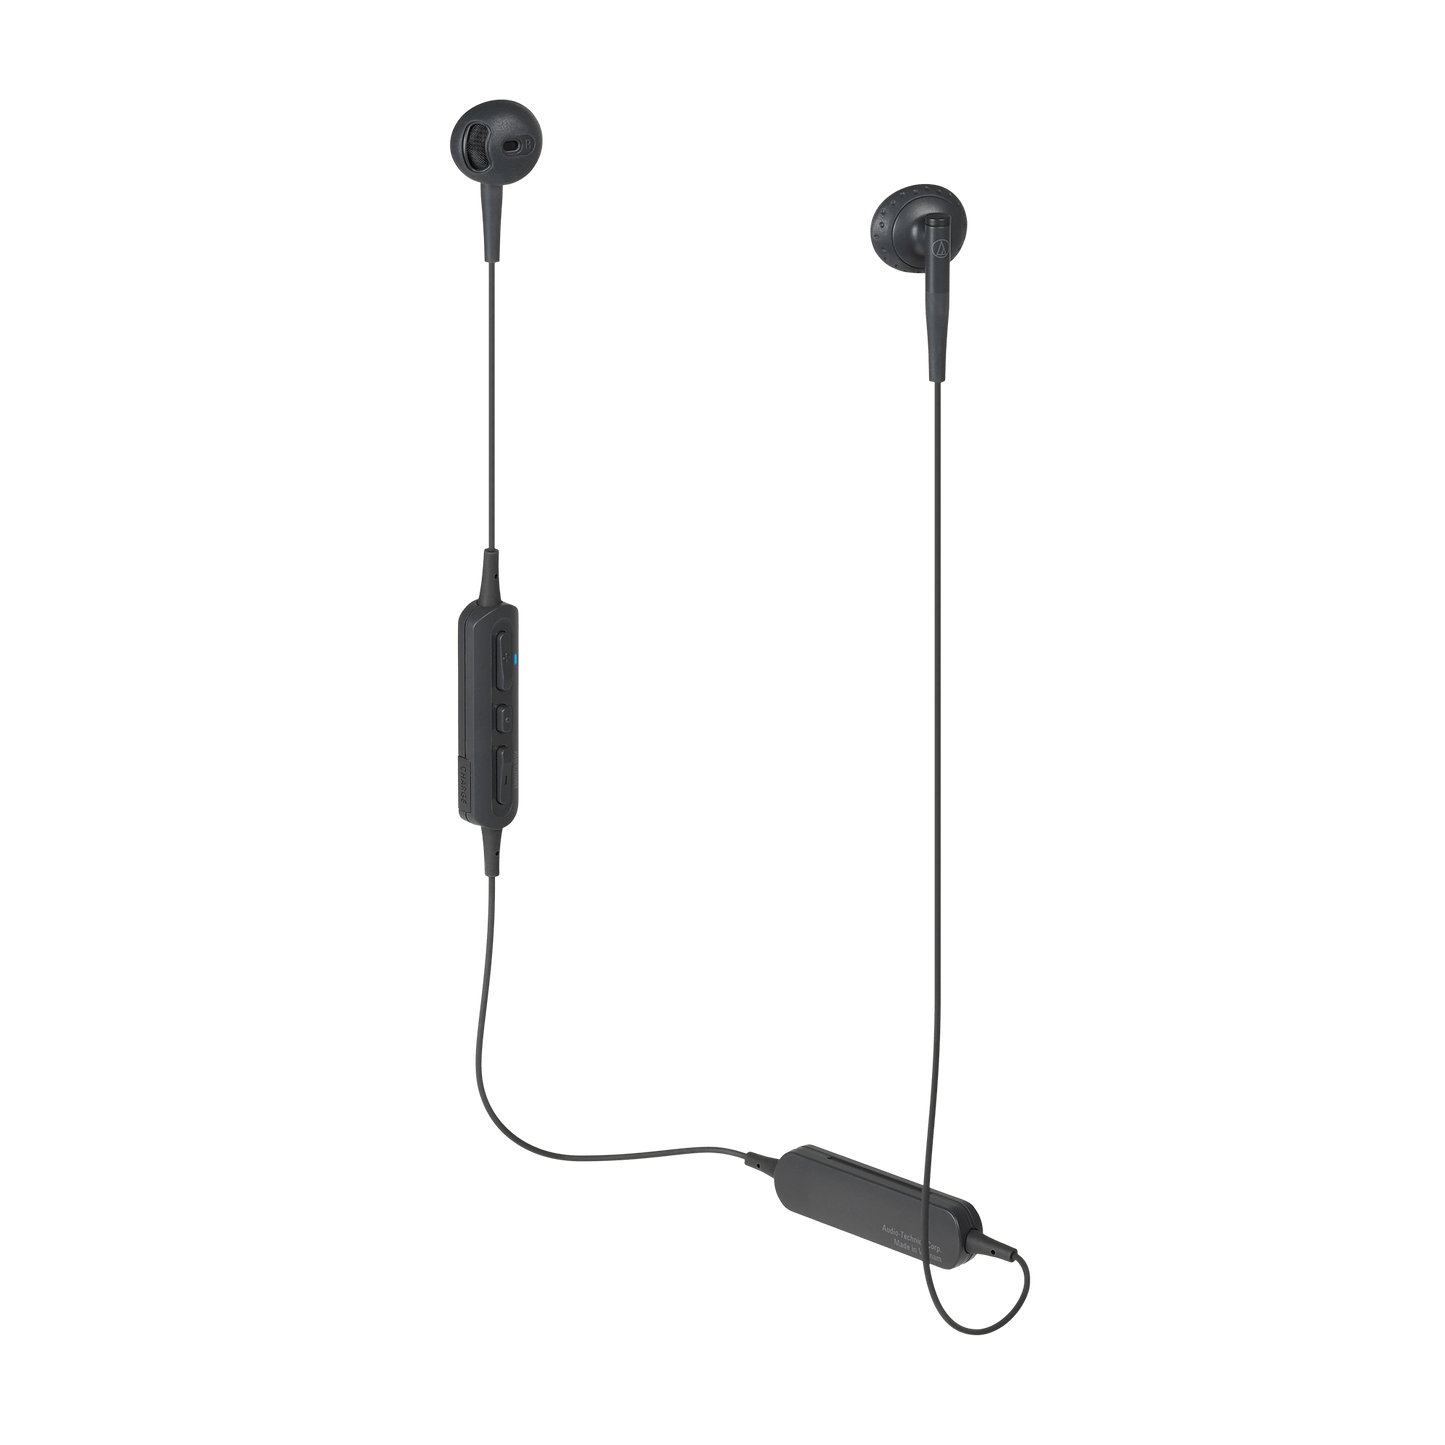 Audio-Technica ATH-C200BT Wireless In-ear Headphones - Black